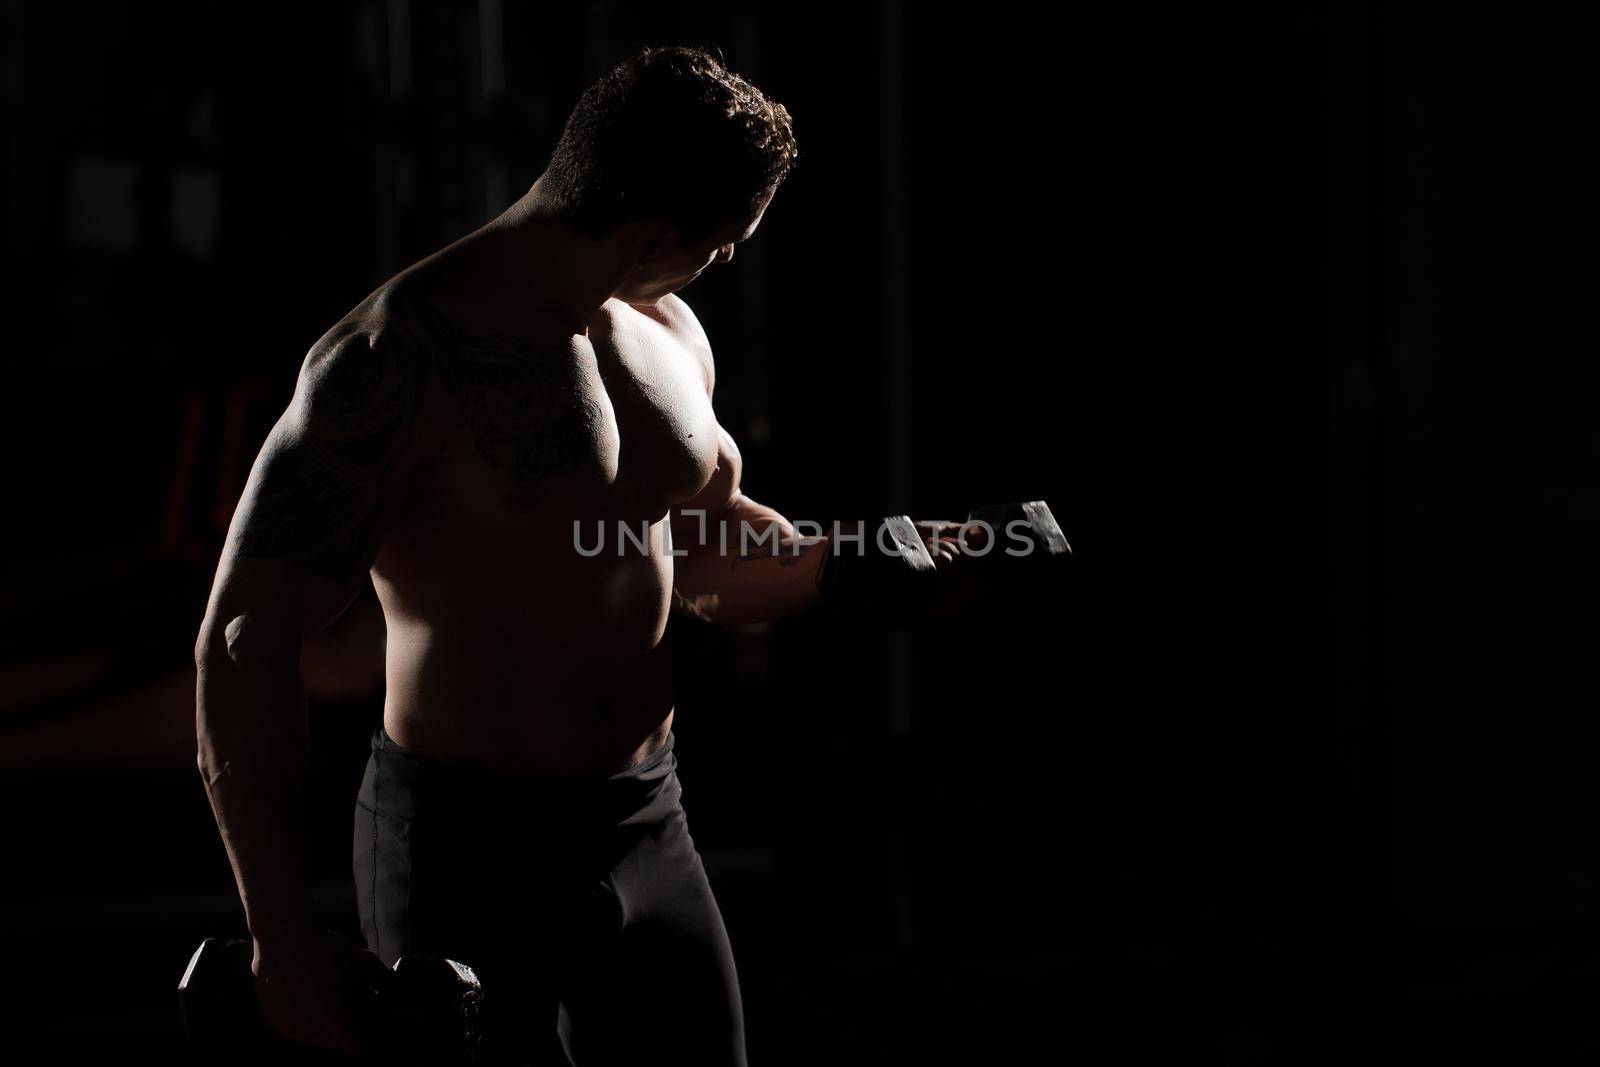 Handsome power athletic guy bodybuilder doing exercises with dumbbell. Fitness muscular body on dark background.